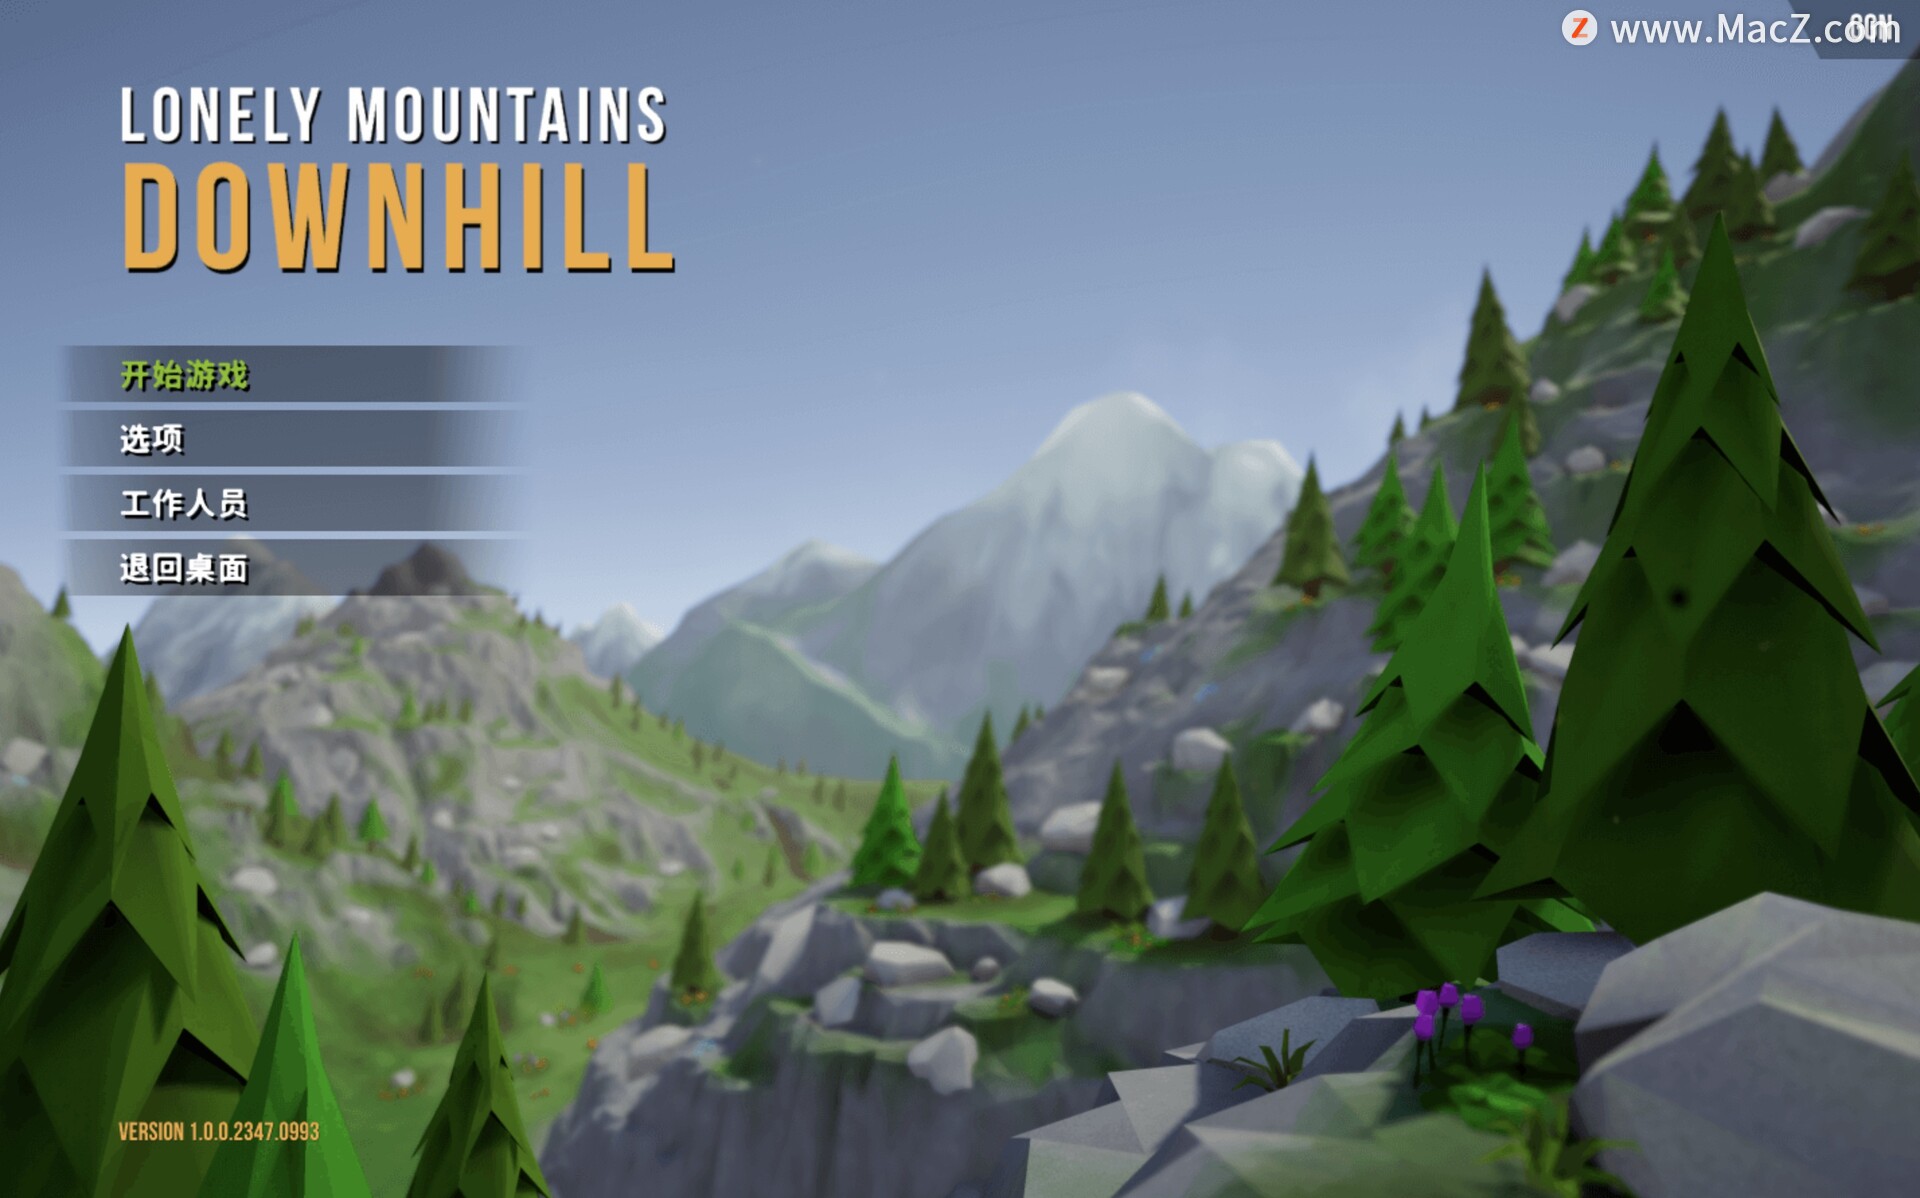 孤山速降 Lonely Mountains: Downhill for Mac(自行车骑行游戏)